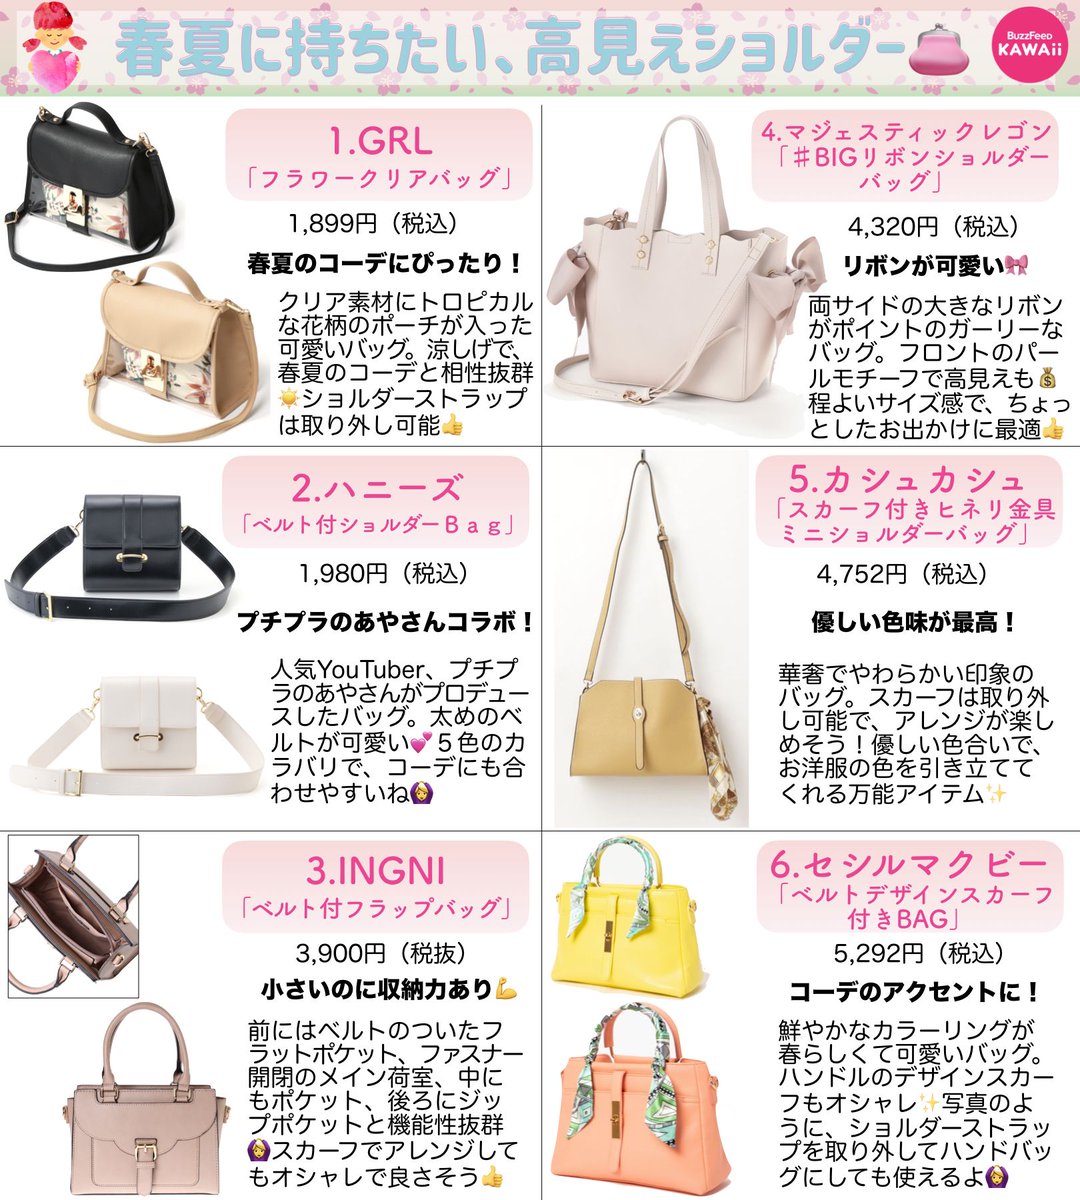 Buzzfeed Kawaii 1万円以下なのに高見え 春夏にぴったりな 可愛いショルダーバッグ をまとめました